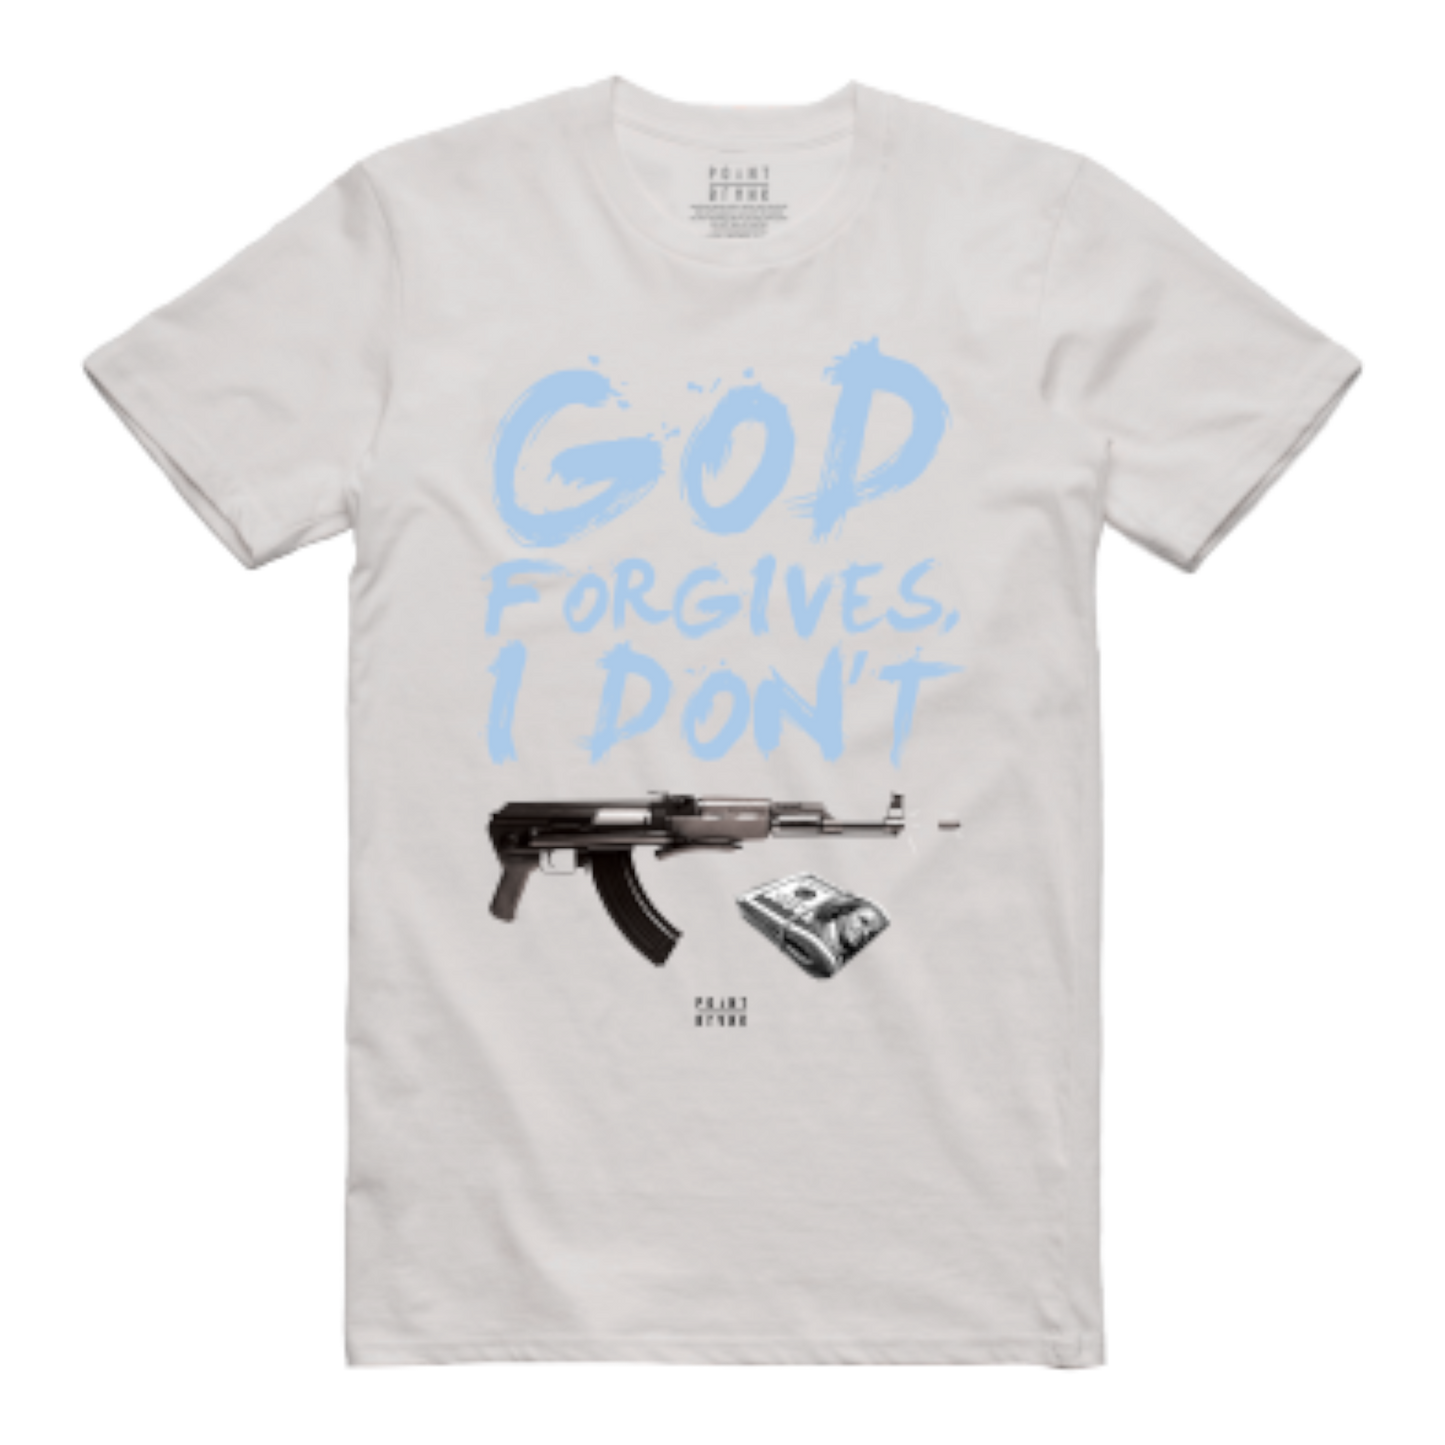 God Forgives, I Don't T-Shirt - Silver / Ice